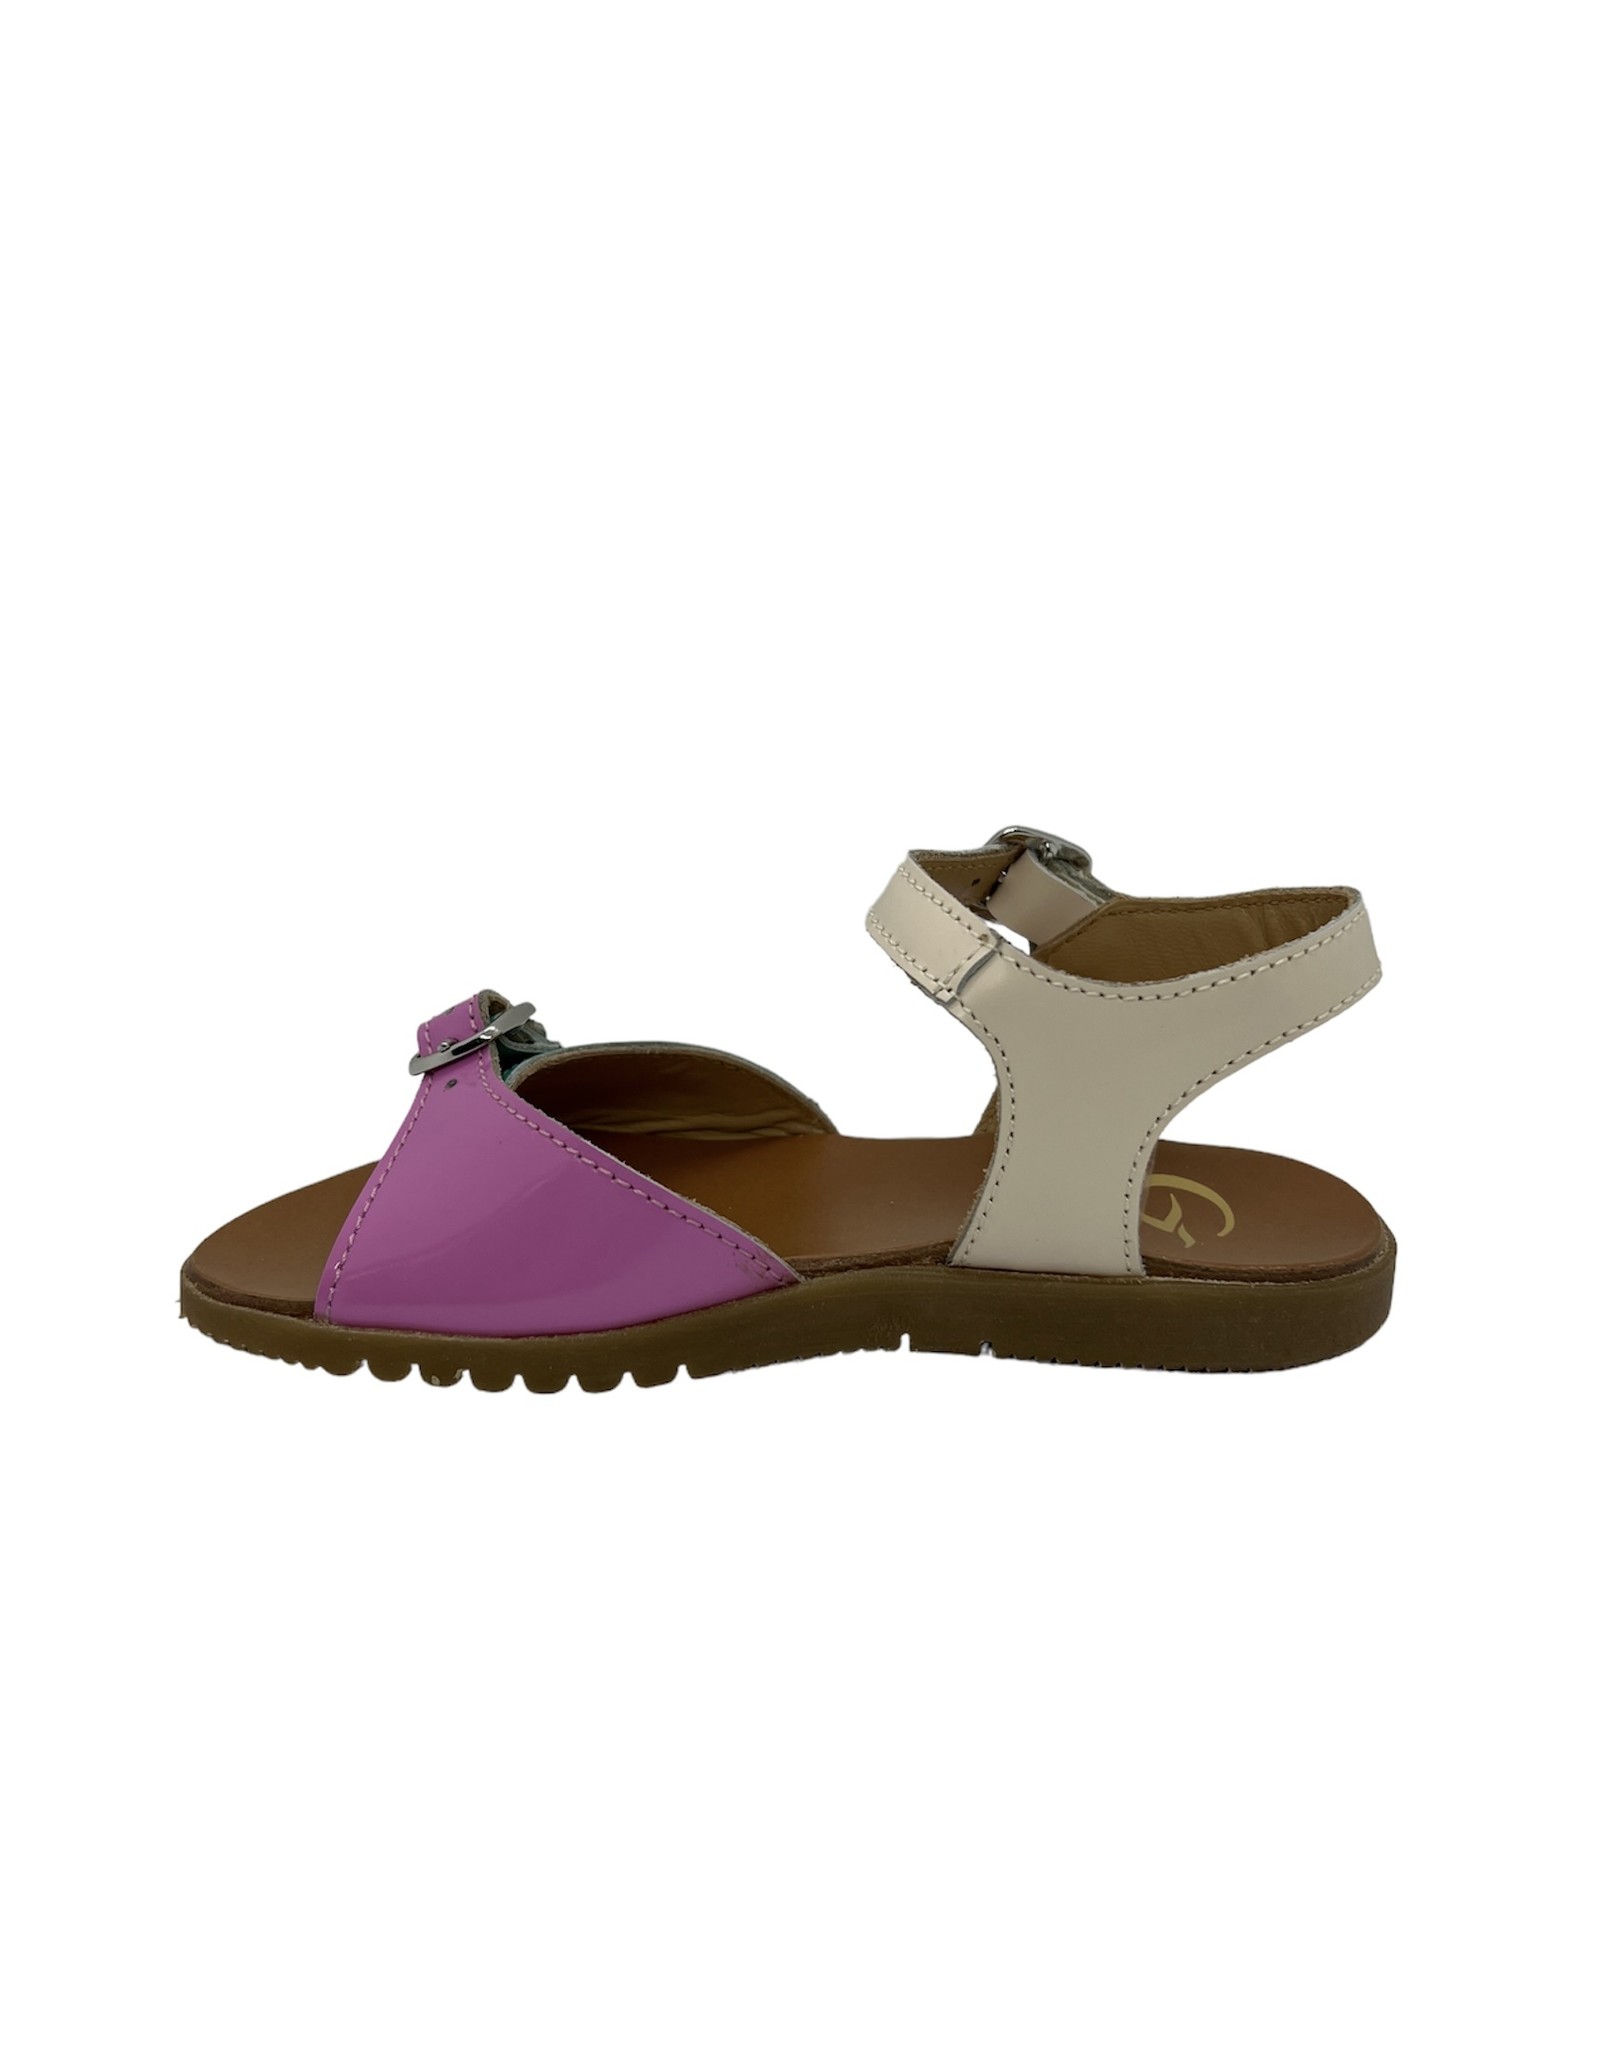 Gallucci J00455 caraibi fuxia beige sandaal